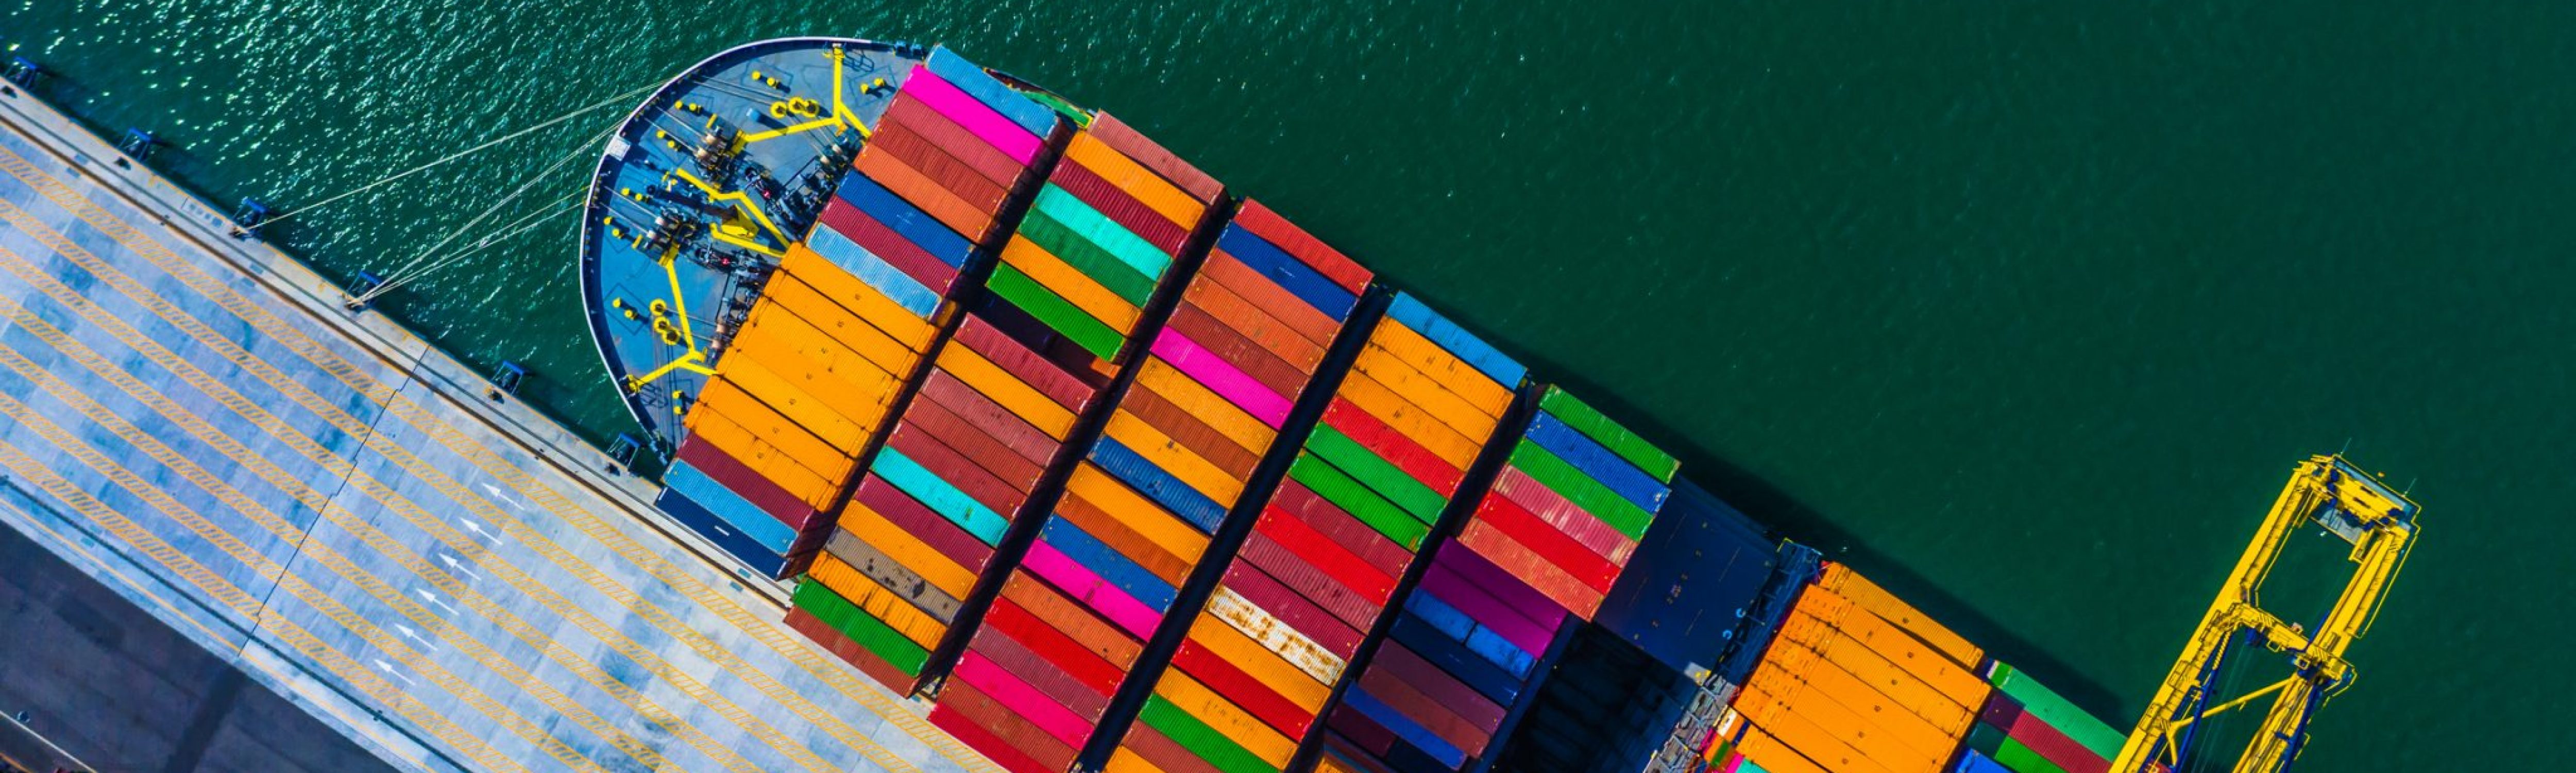 shipping crates globalisation